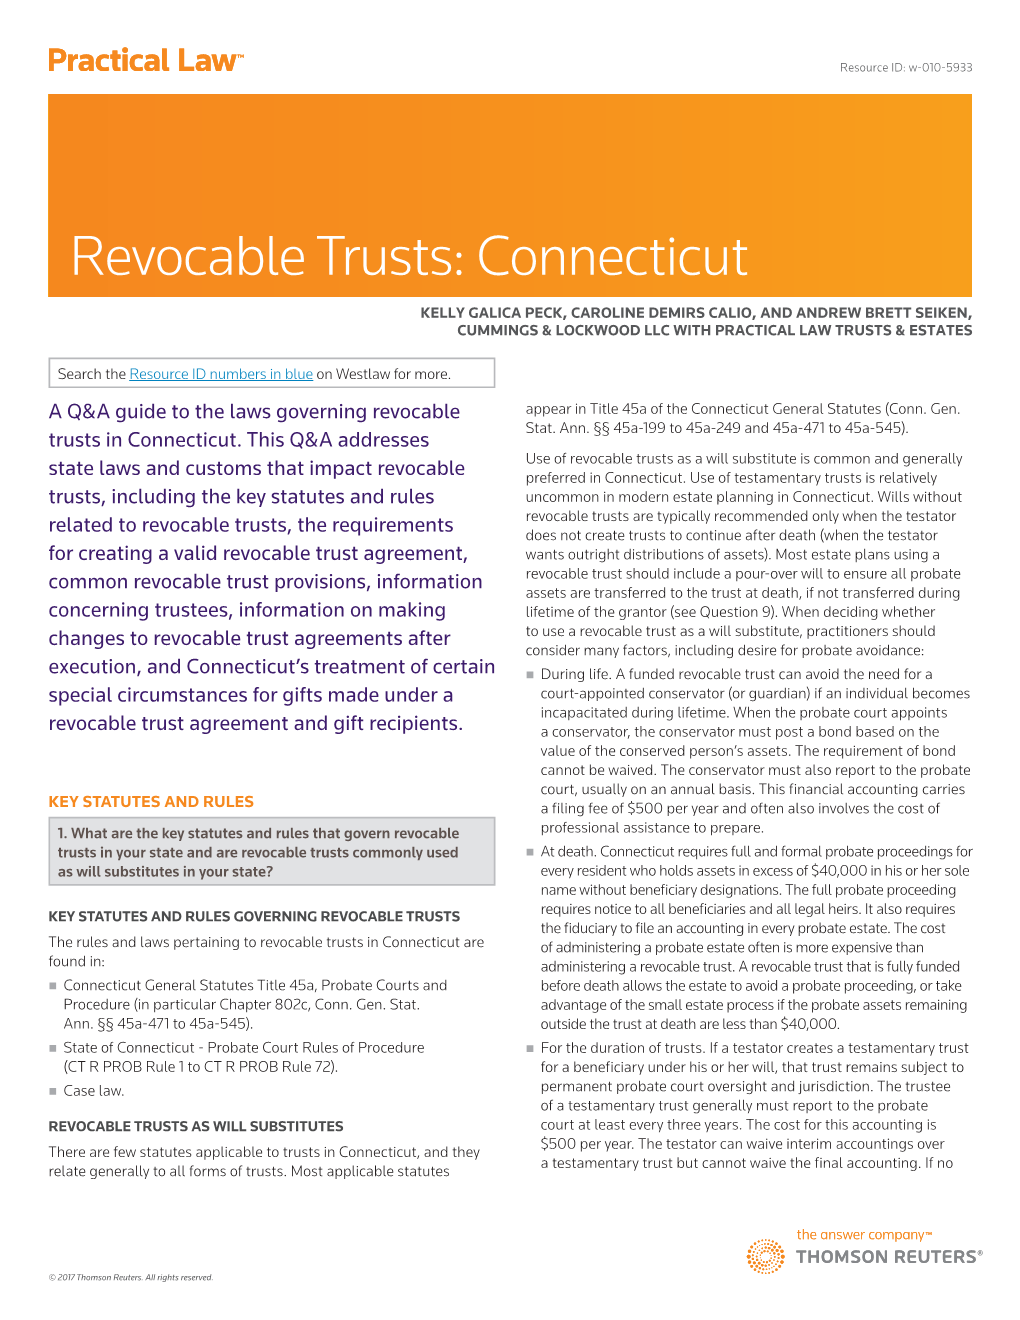 Revocable Trusts: Connecticut